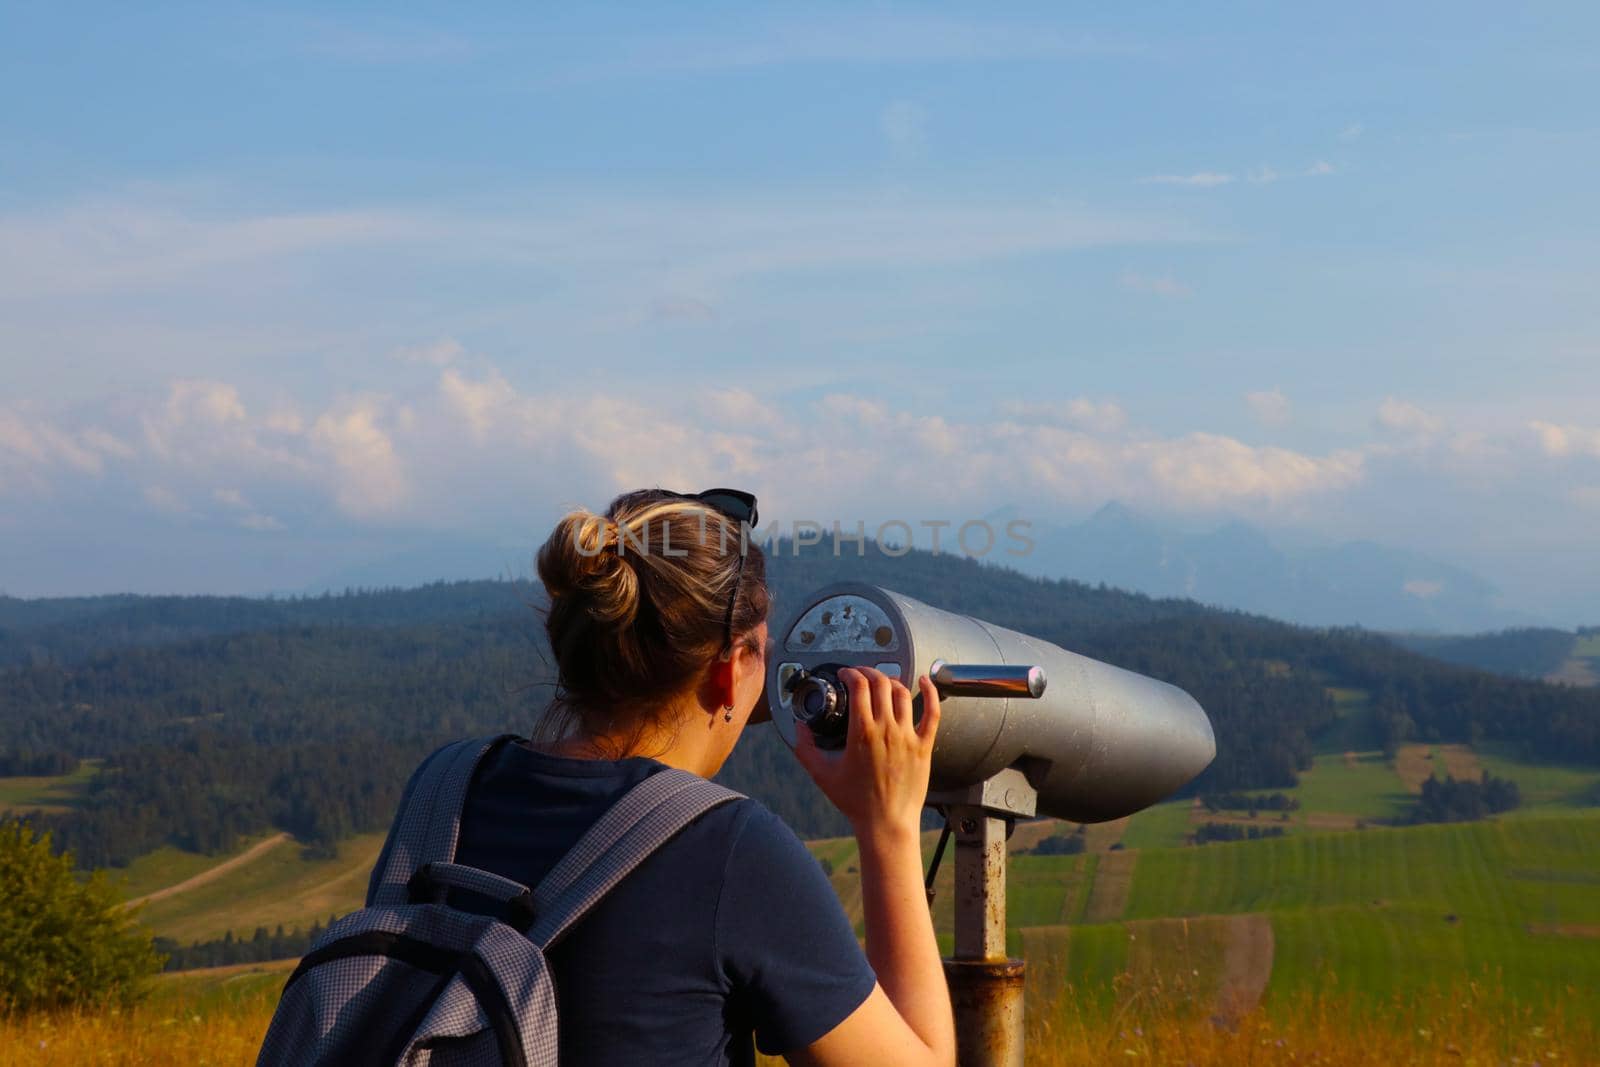 The traveler looks into the distance through binoculars. Mountain landscape